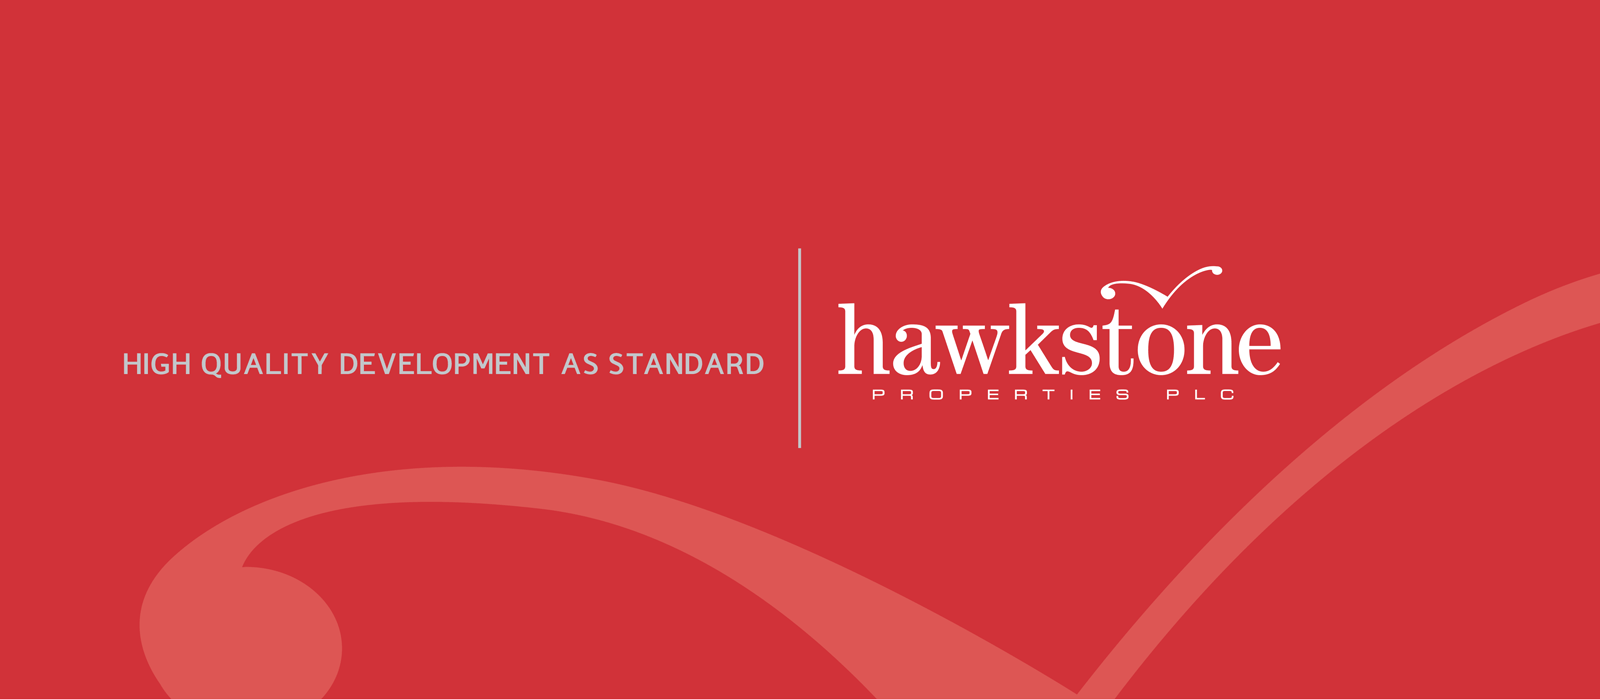 Hawkestone Properties